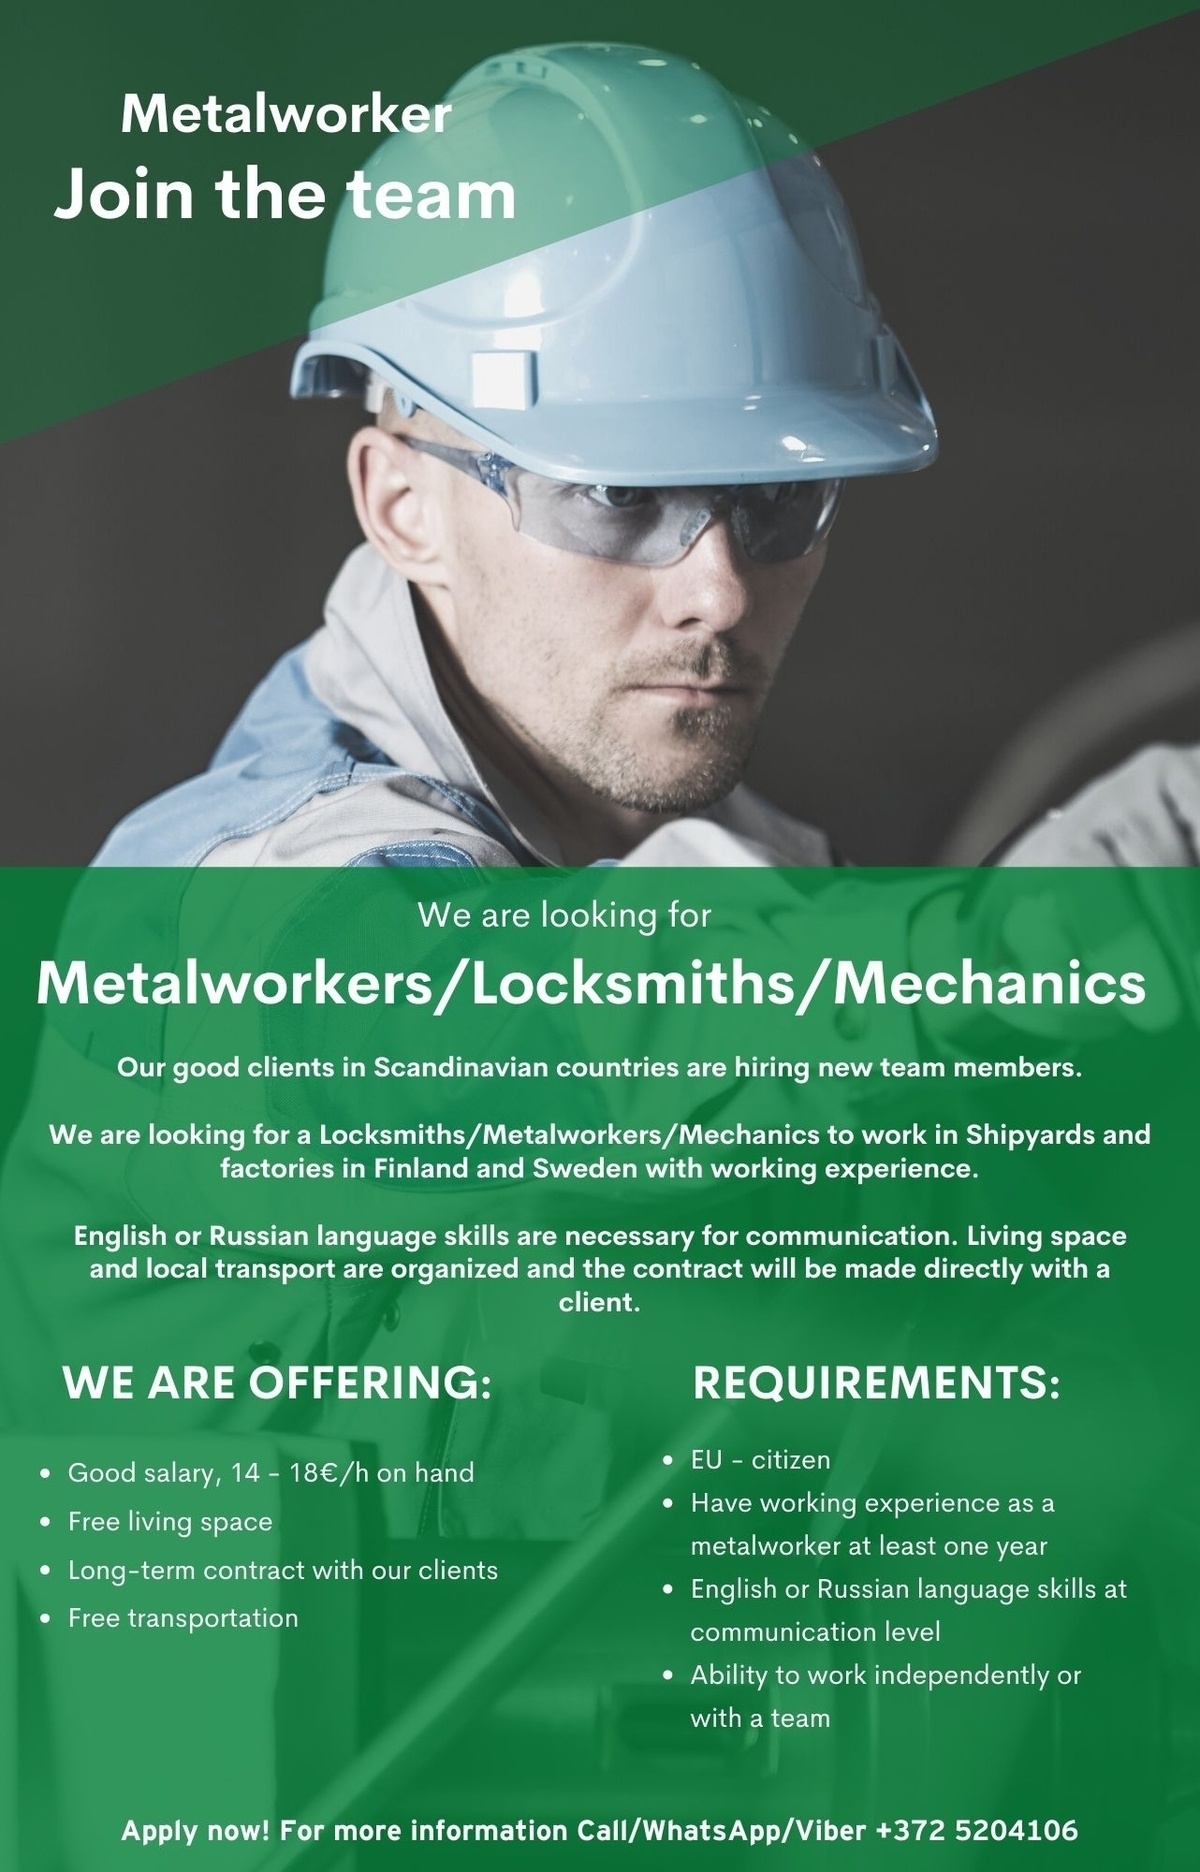 Emplofox OÜ Metalworker/Locksmith/Mechanic - Join the team!